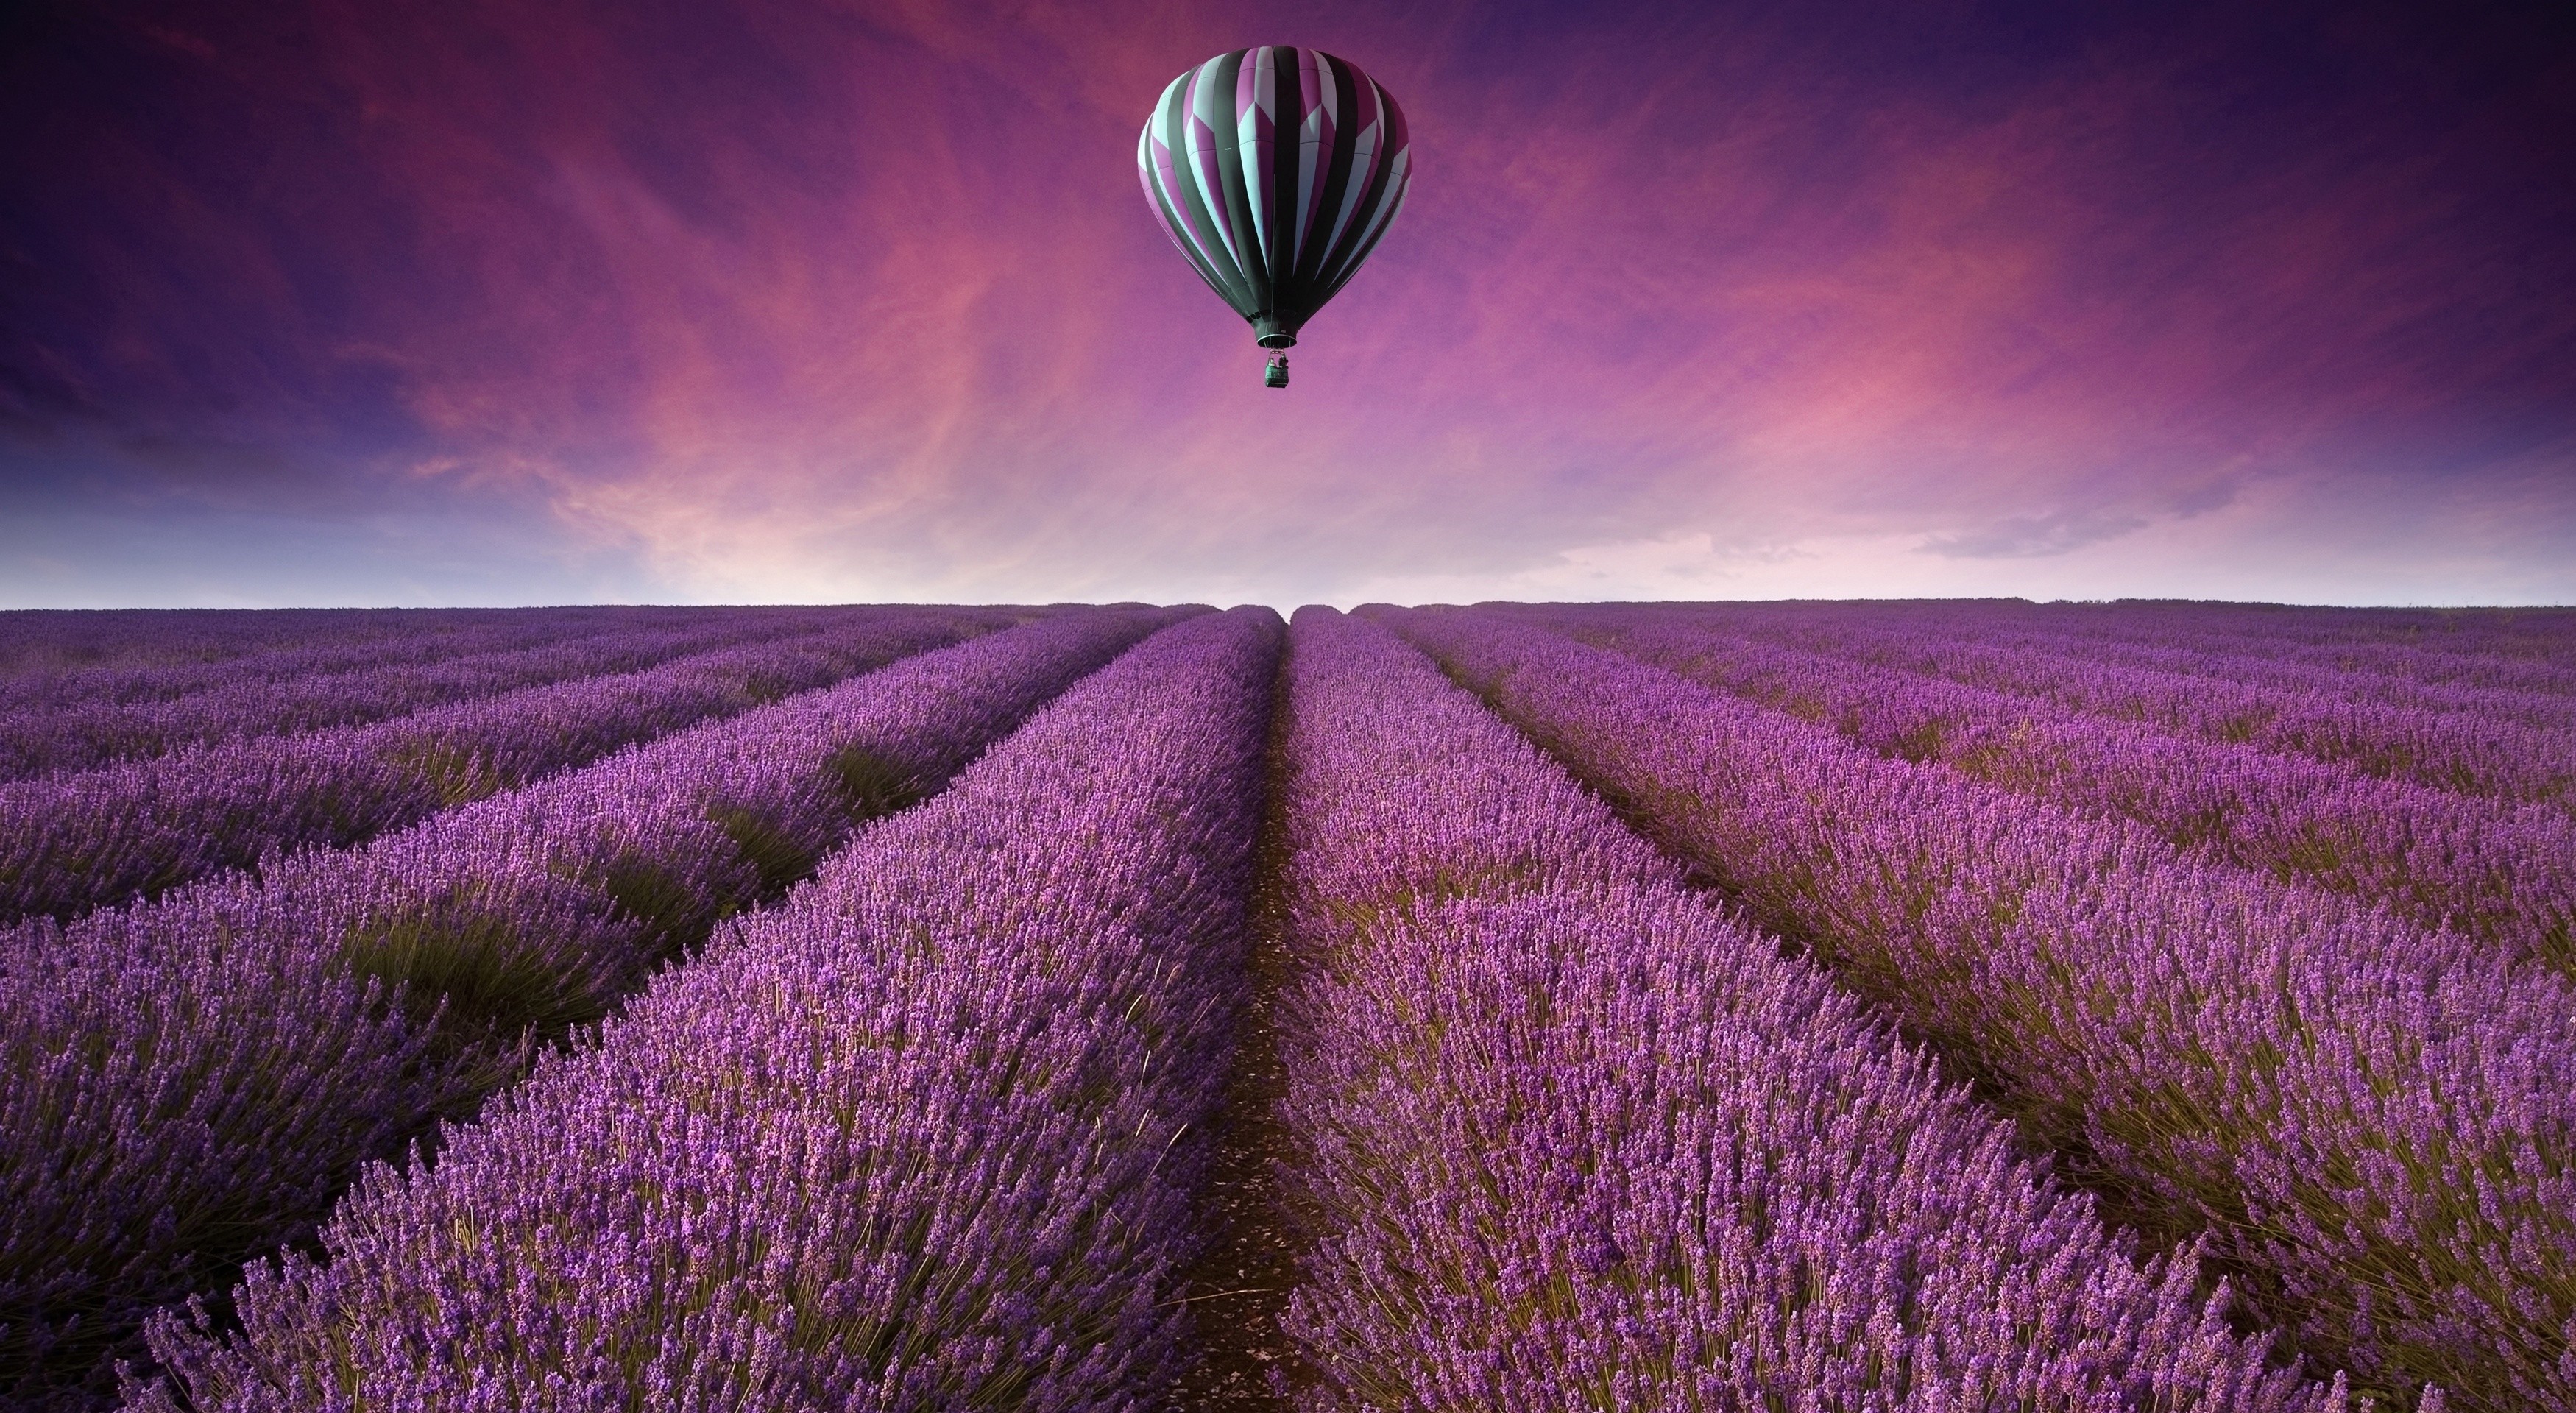 General 3500x1920 hot air balloons field lavender purple flowers landscape Agro (Plants) vehicle plants sky outdoors